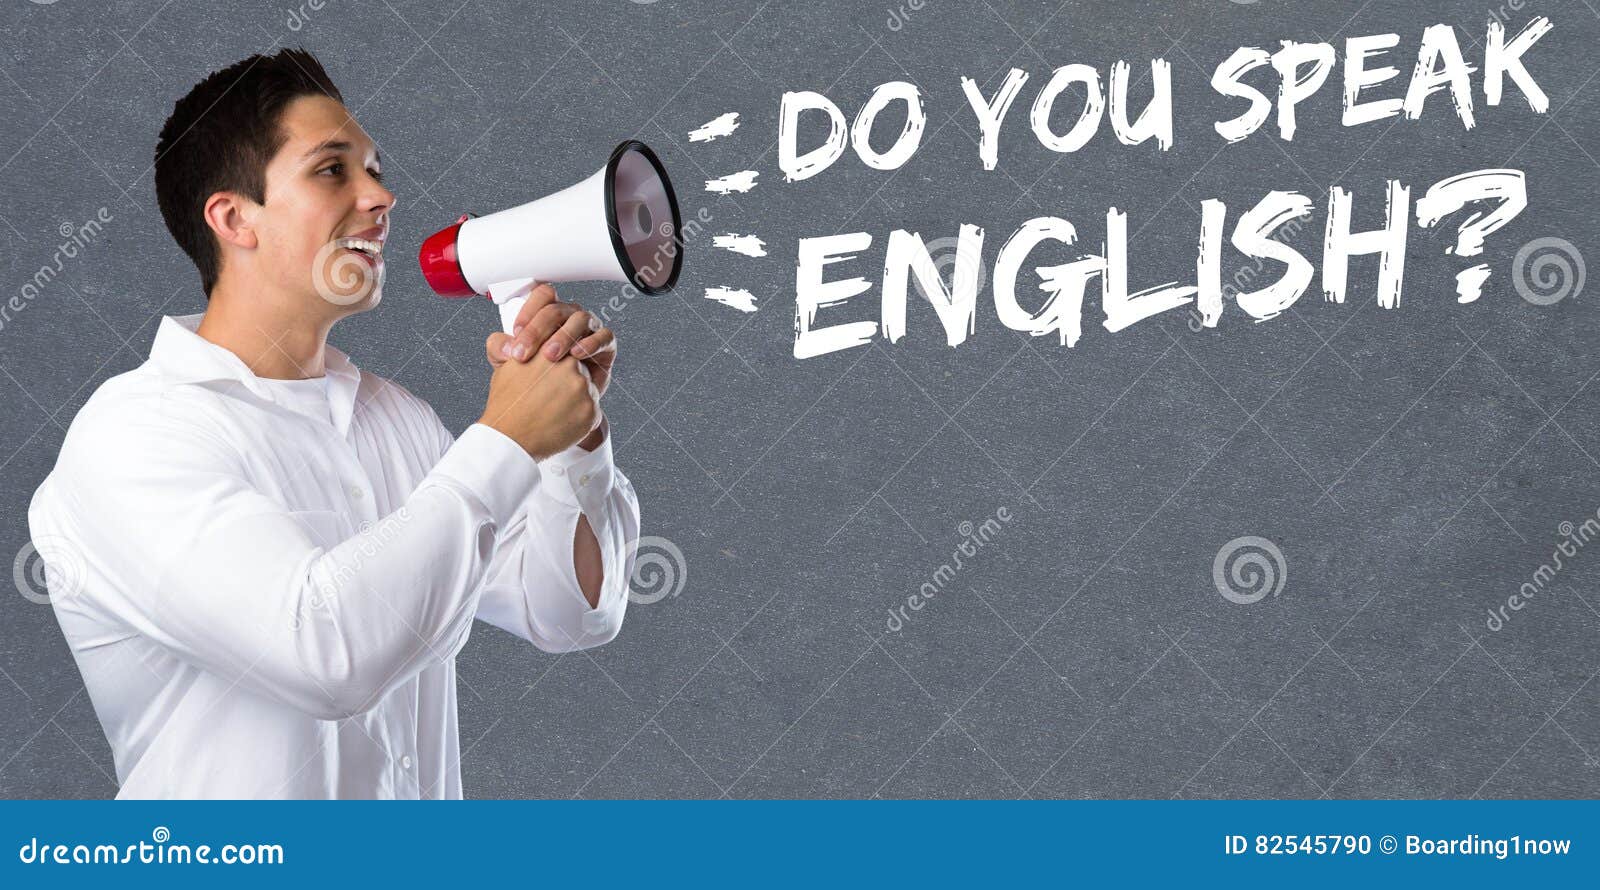 Do you speak english well